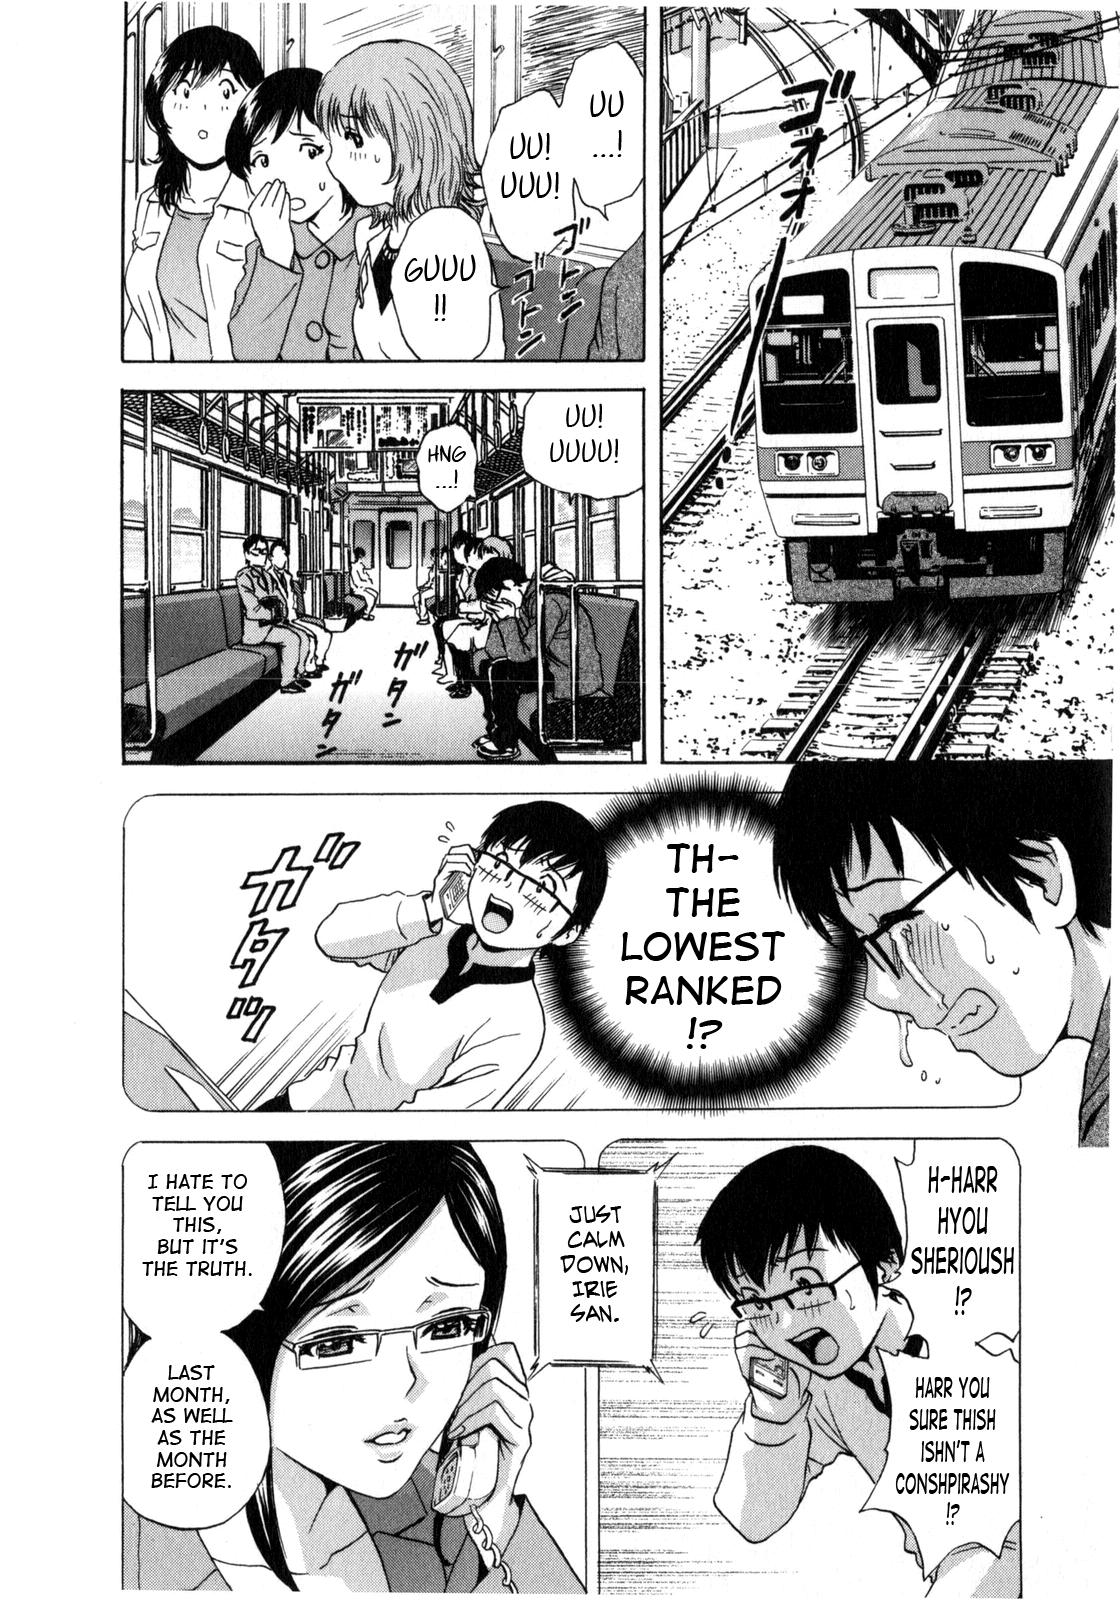 [Hidemaru] Life with Married Women Just Like a Manga 2 - Ch. 1-4 [English] {Tadanohito} 70